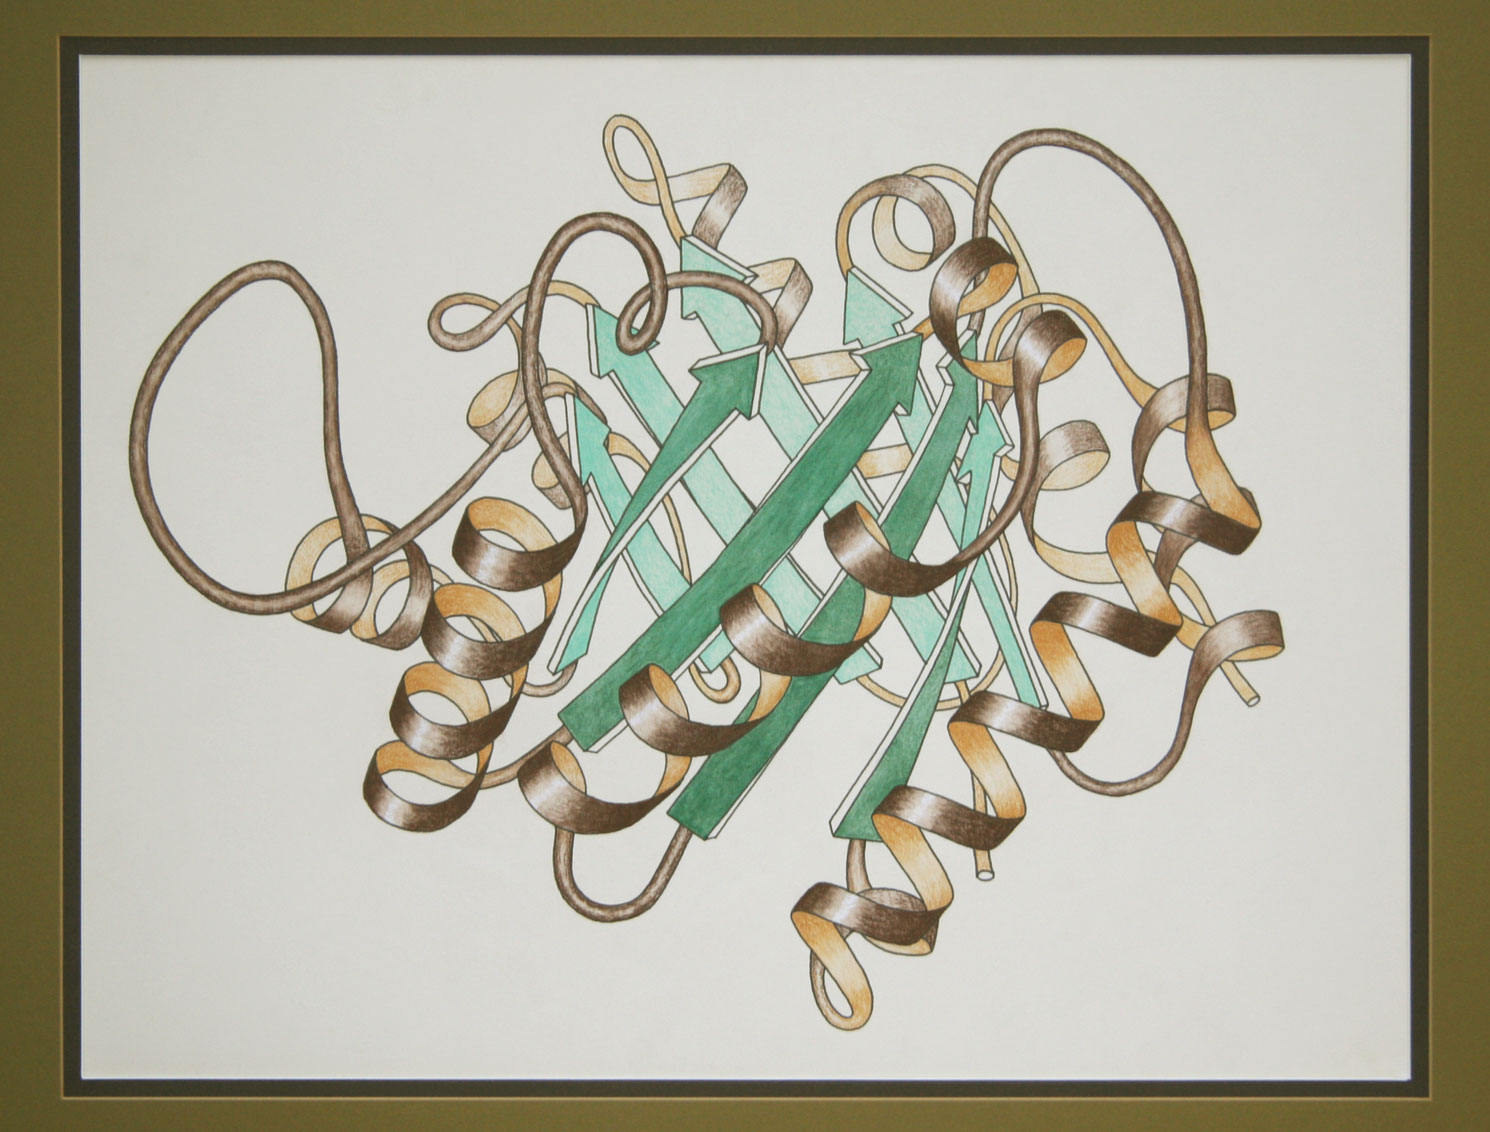 Hand-drawn ribbon diagram of a molecule